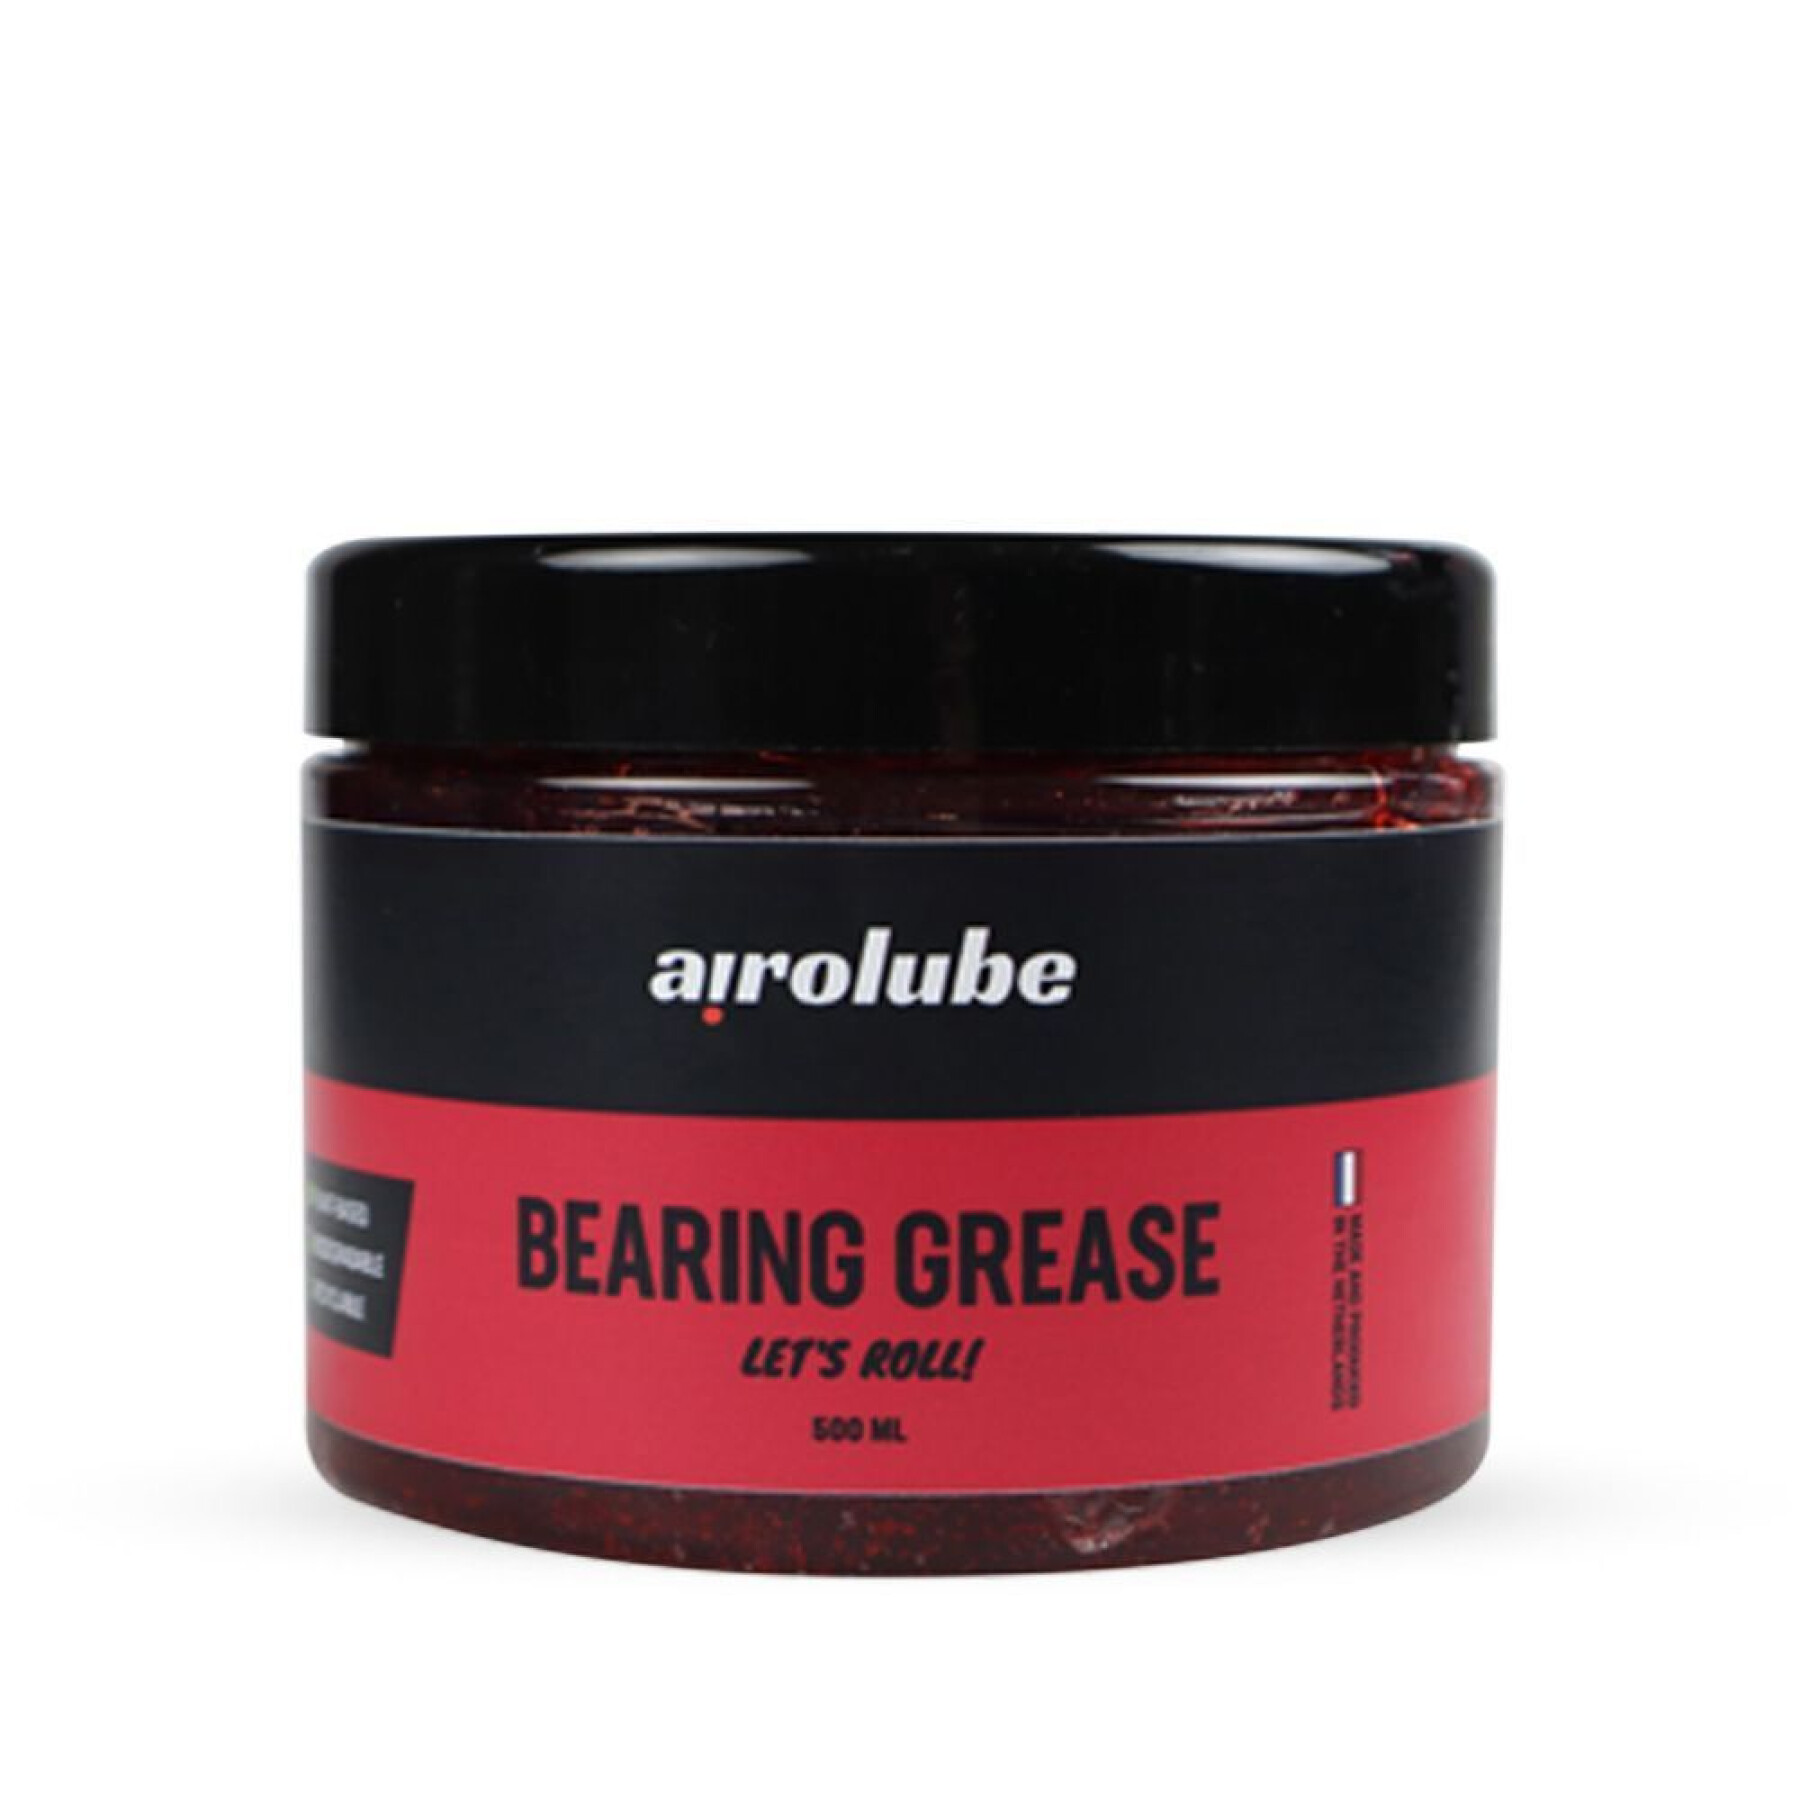 Bearing grease Airolube